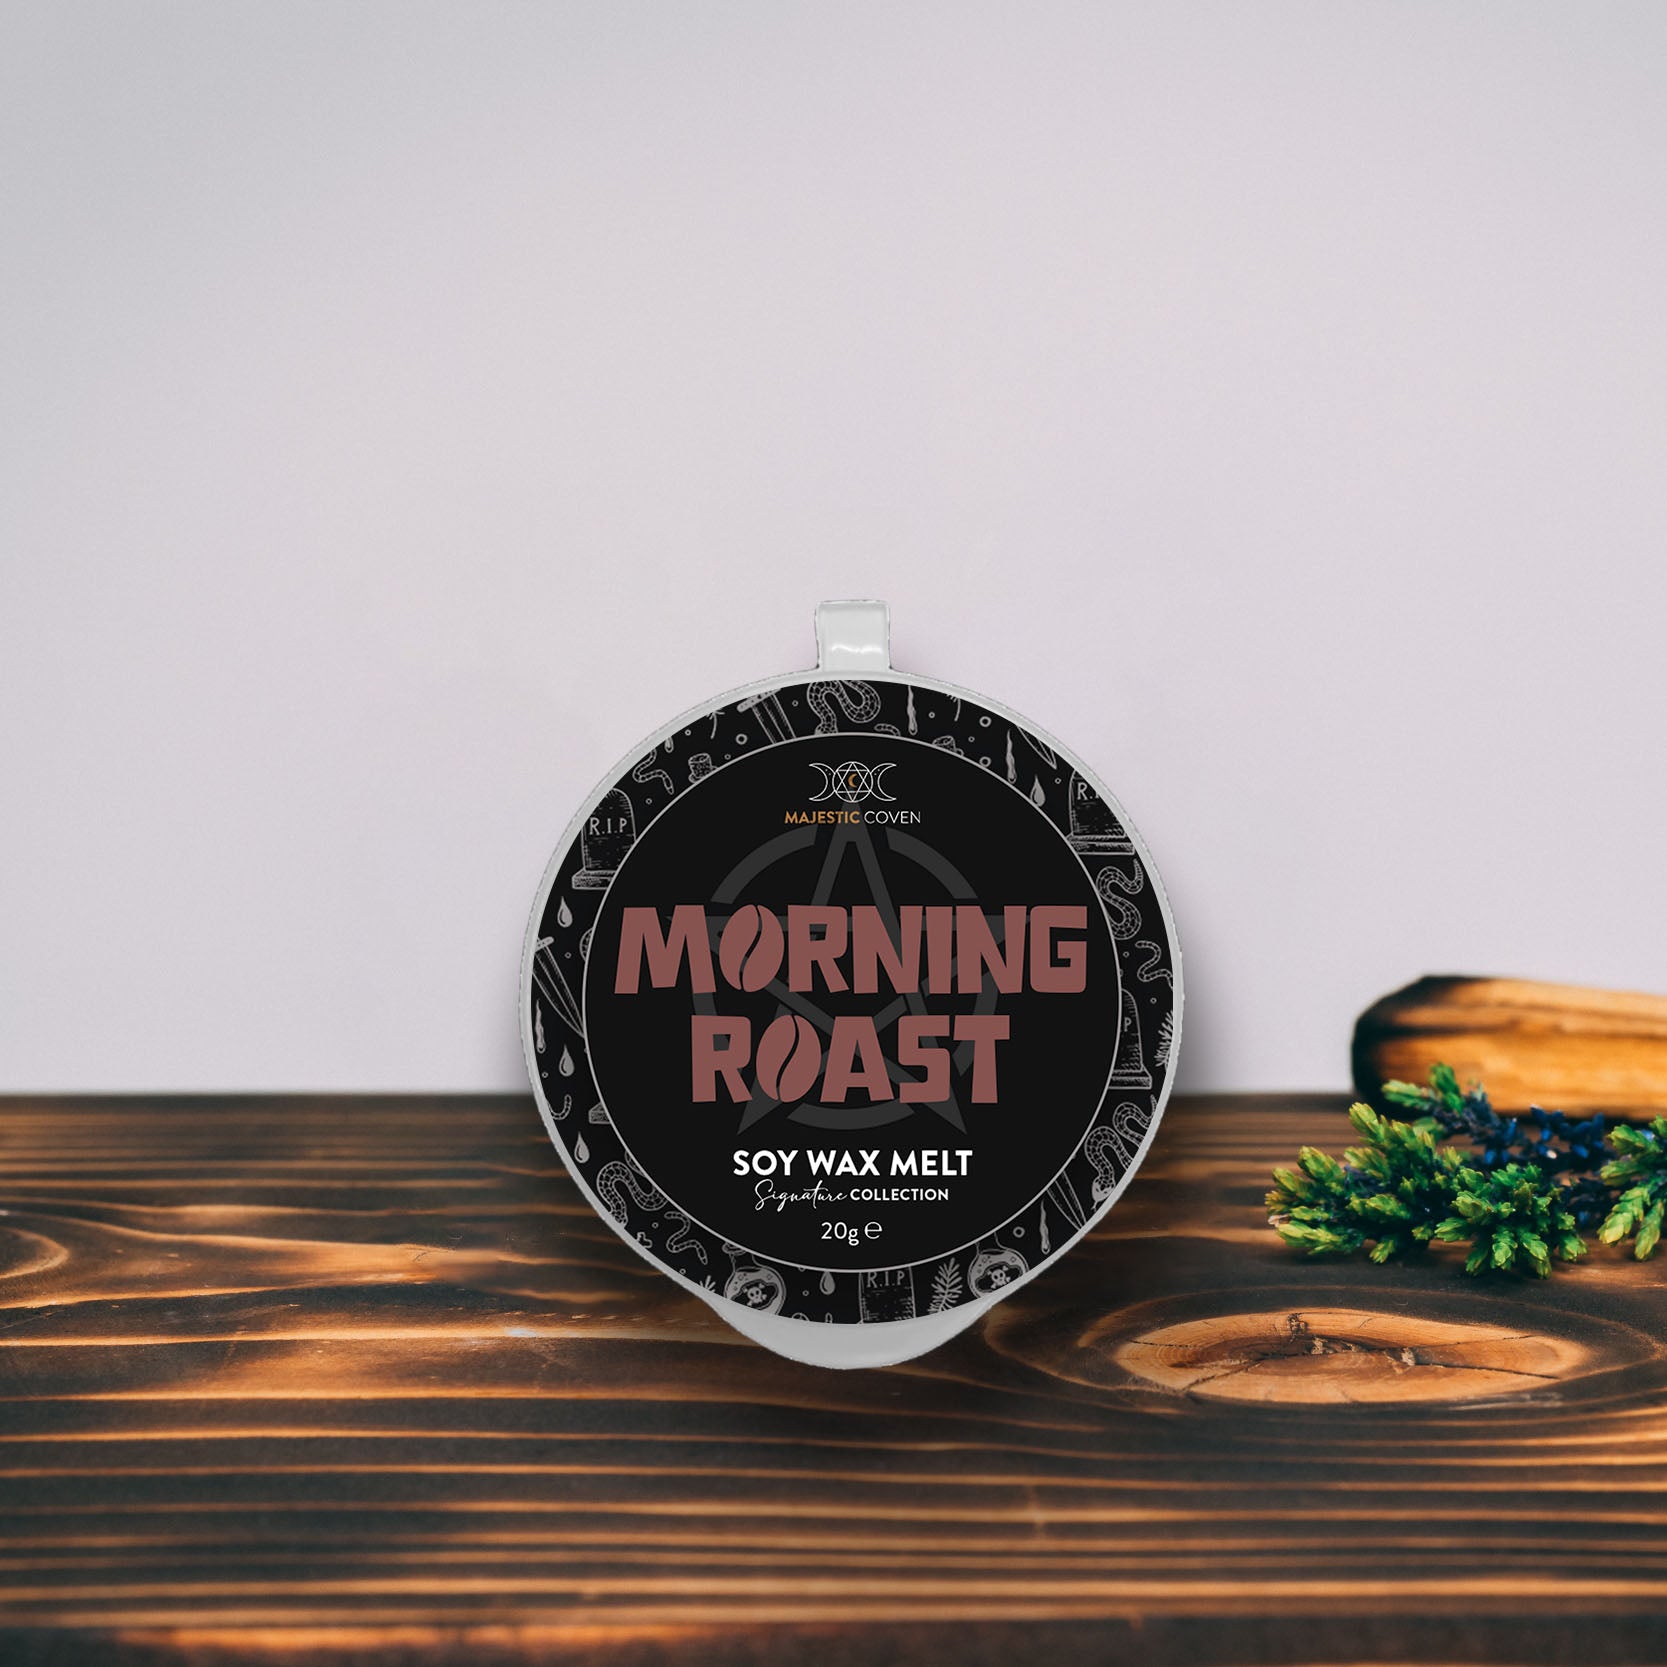 Morning Roast - Soy Wax Melt 20g Sample Pot Majestic Coven